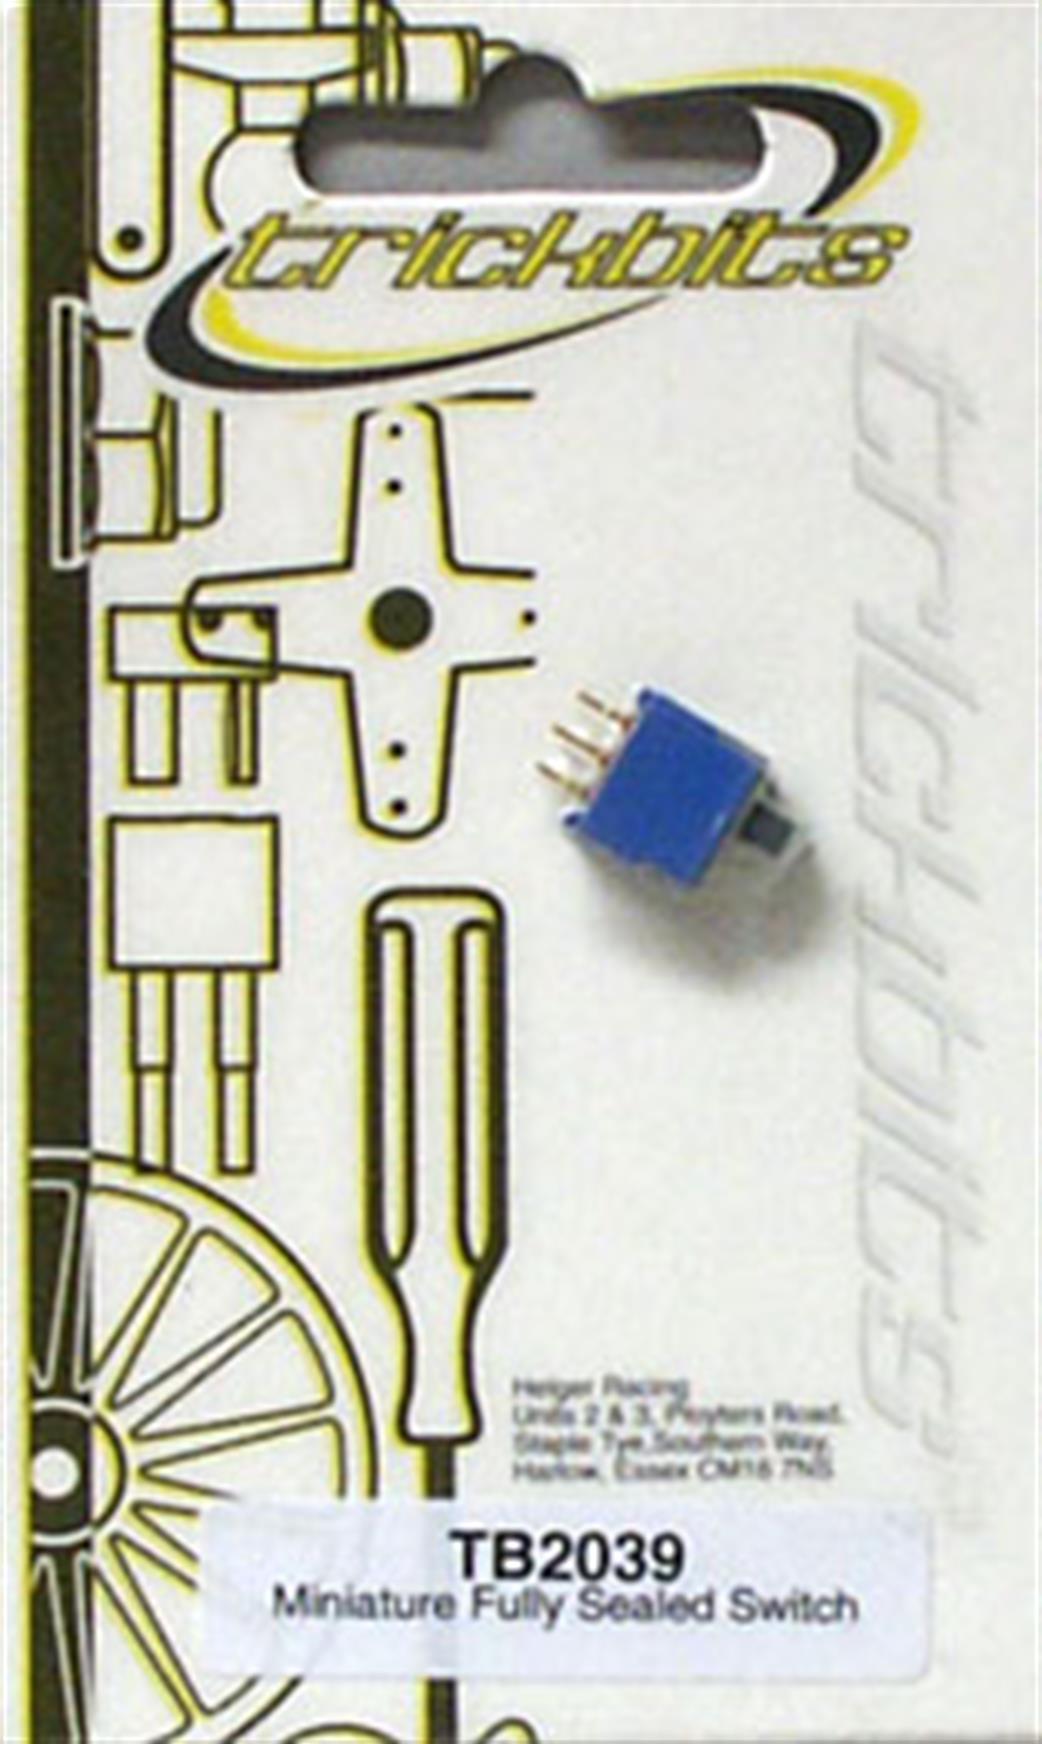 Trickbits TB2039 Mini Fully Sealed Switch